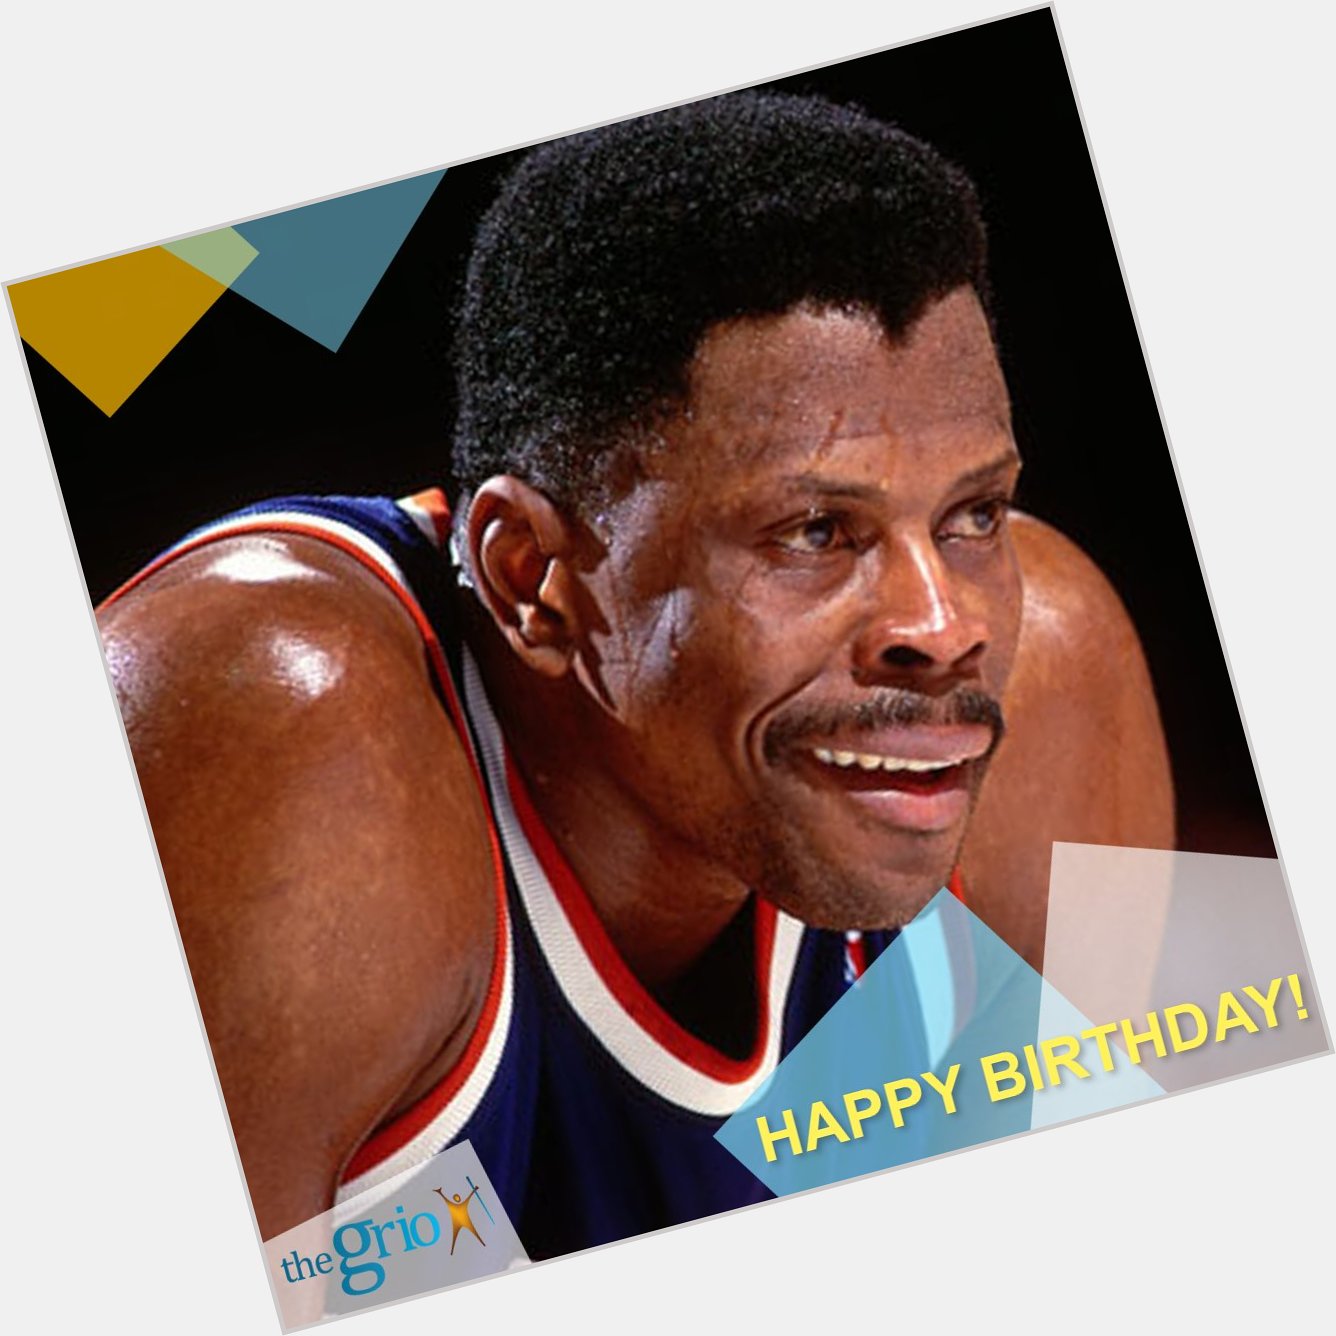 Happy Birthday to the legendary hall-of-famer, Patrick Ewing! 